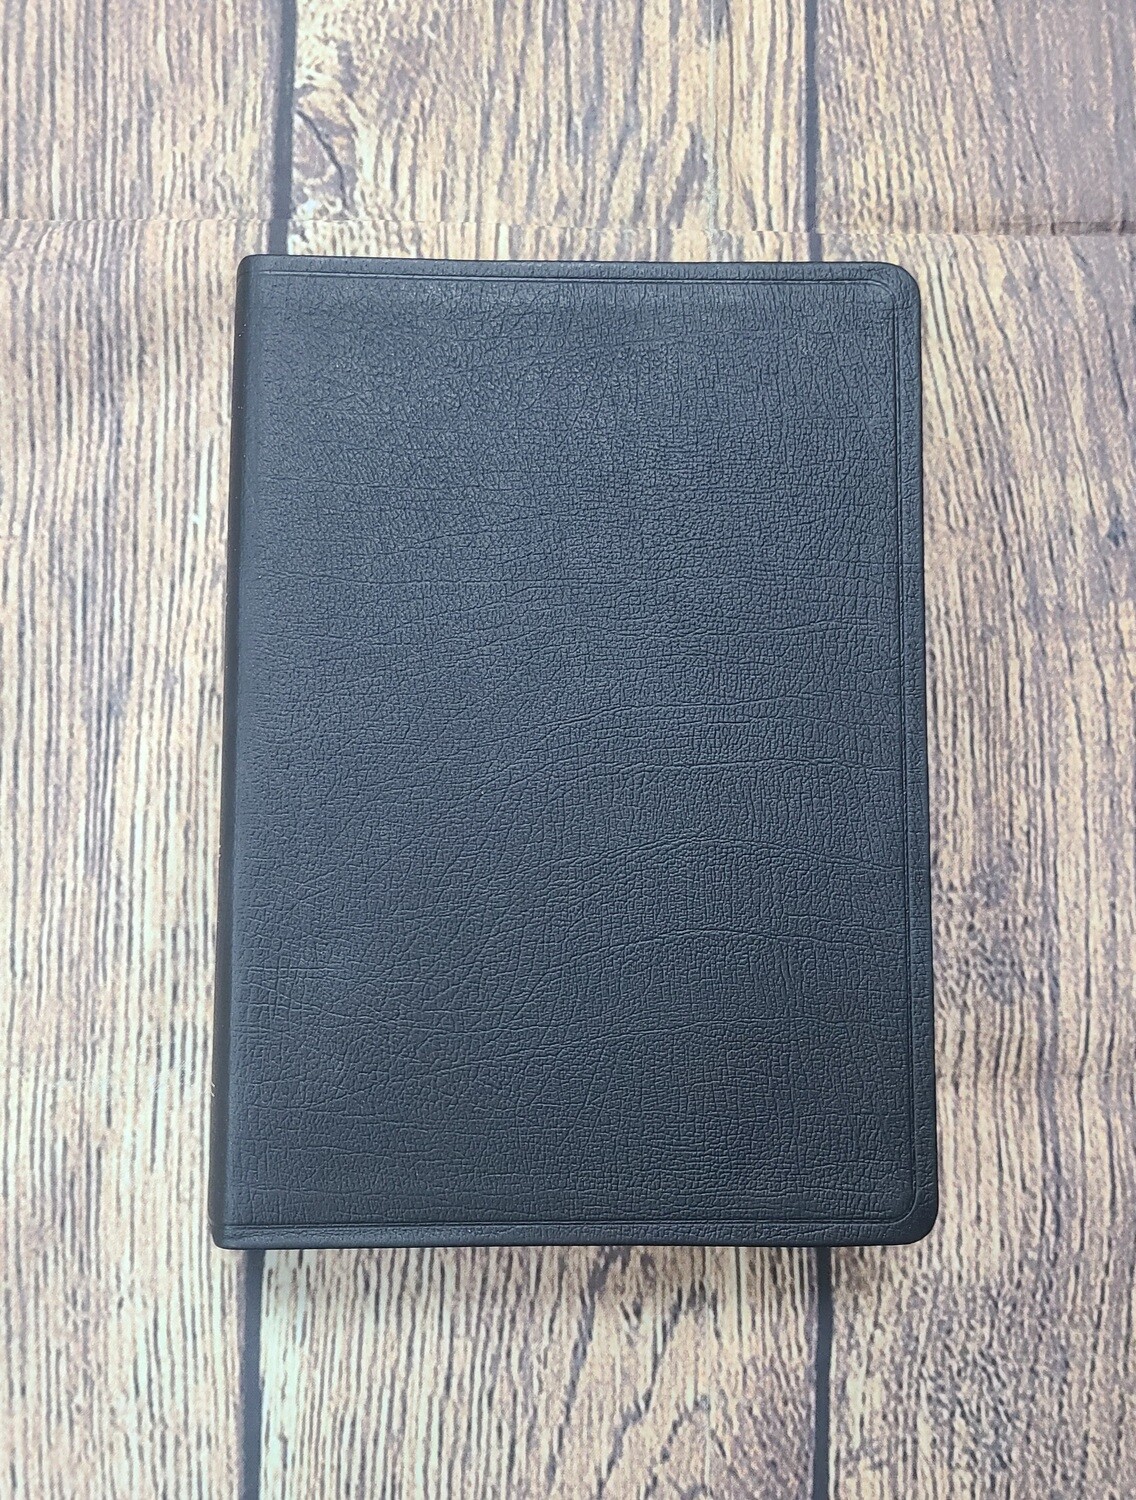 ESV Super Giant Print Bible - Black Genuine Leather